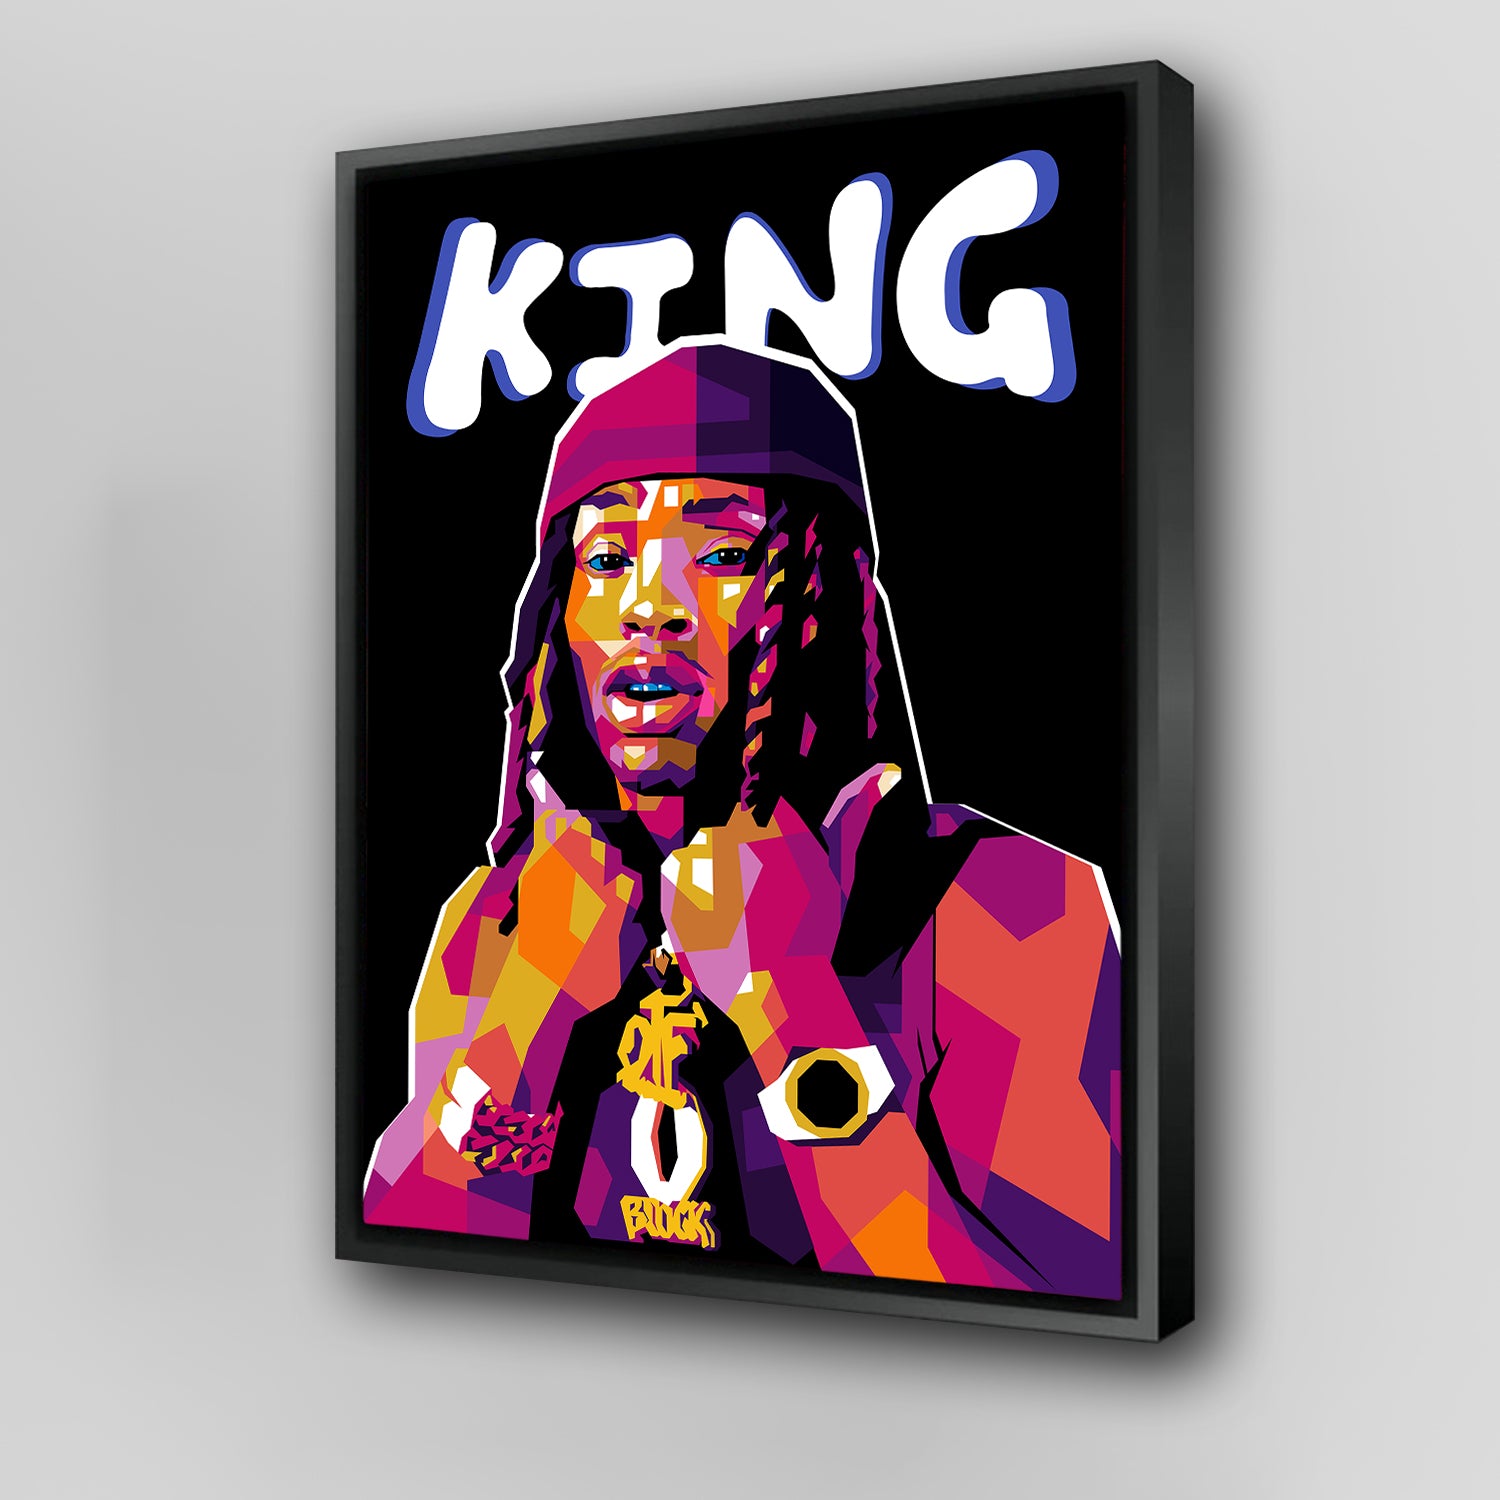 King Von King to U Canvas Classic Celebrity Canvas